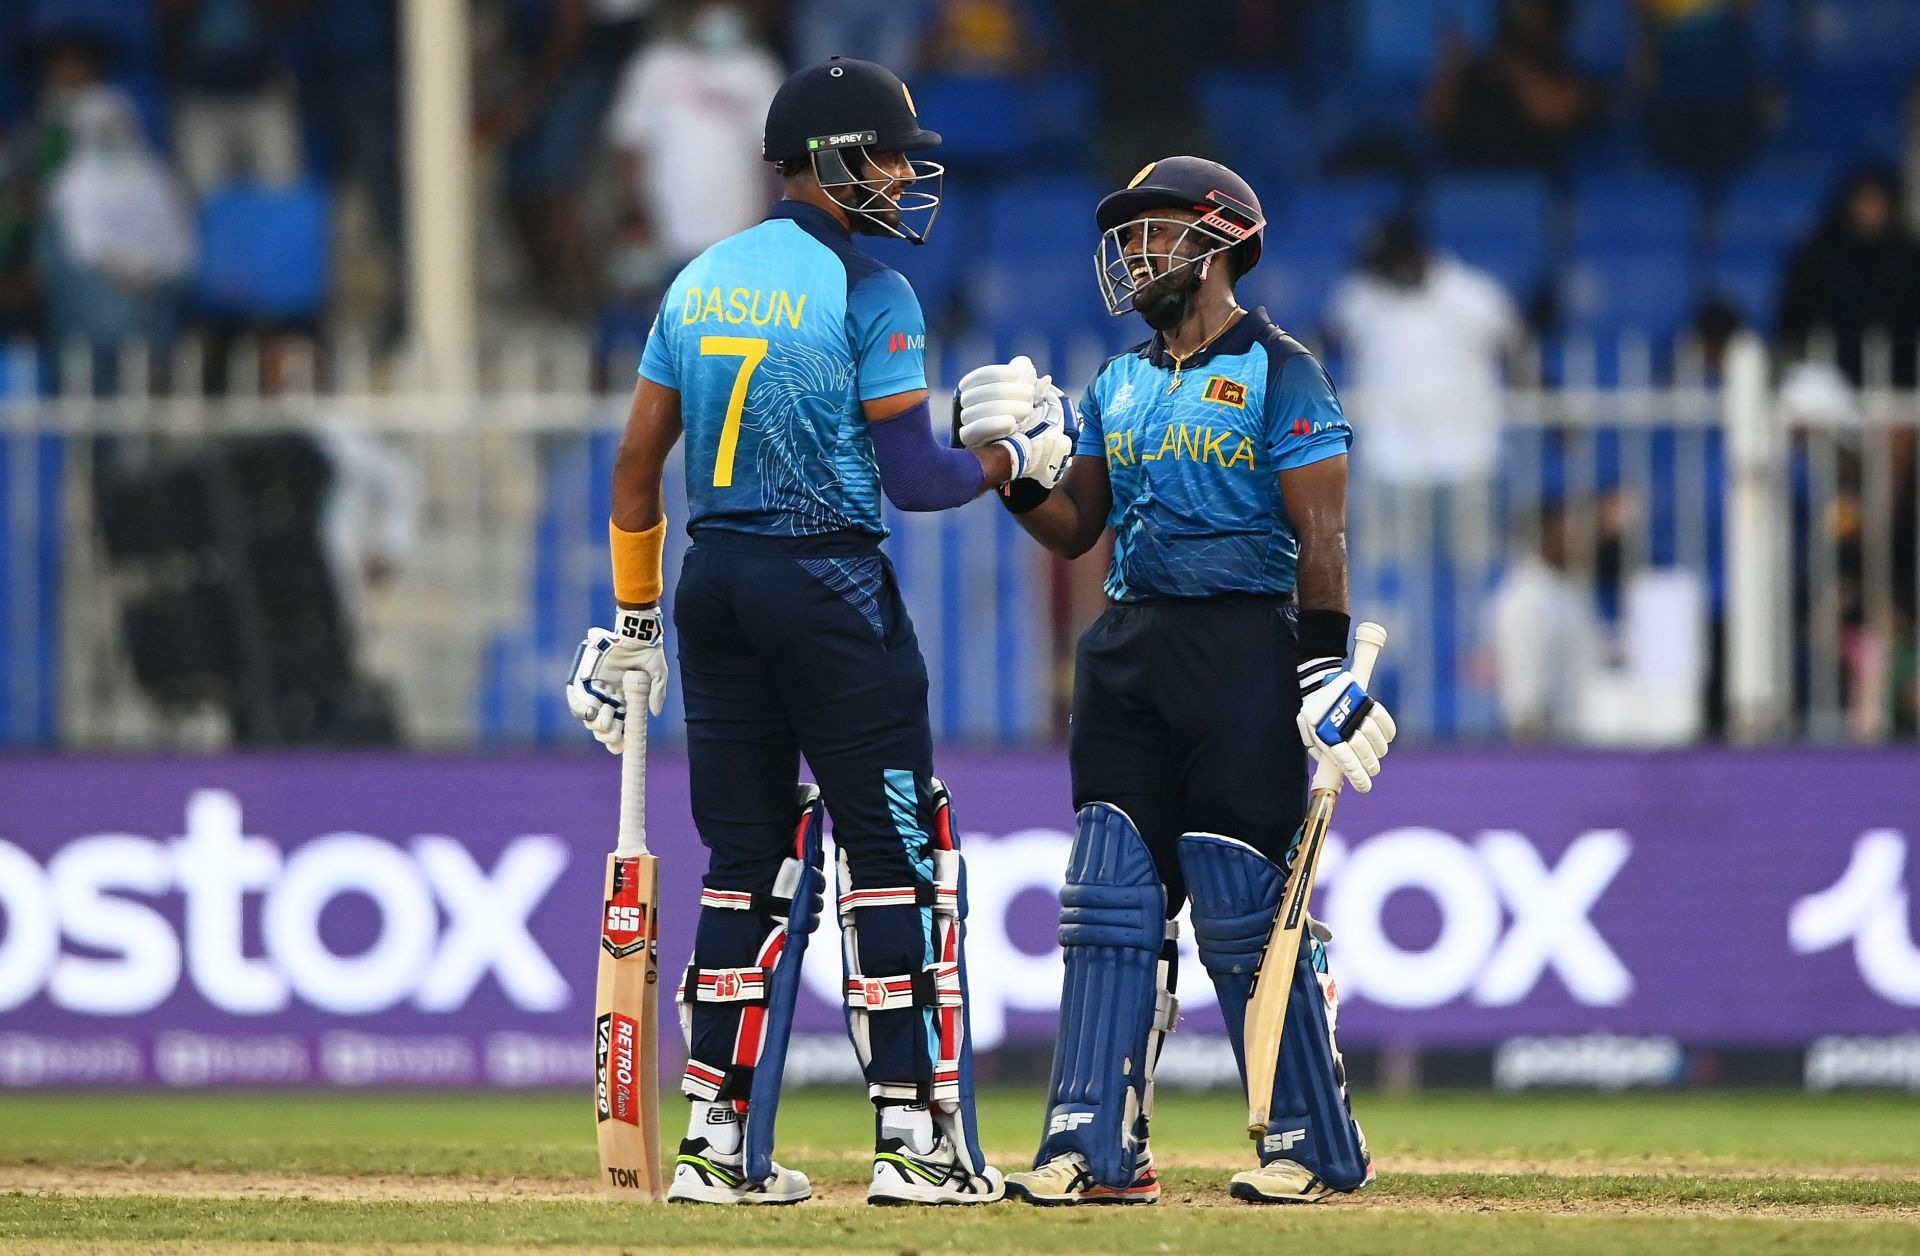 Sri Lanka will be in action at the Dubai International Cricket Stadium tomorrow evening